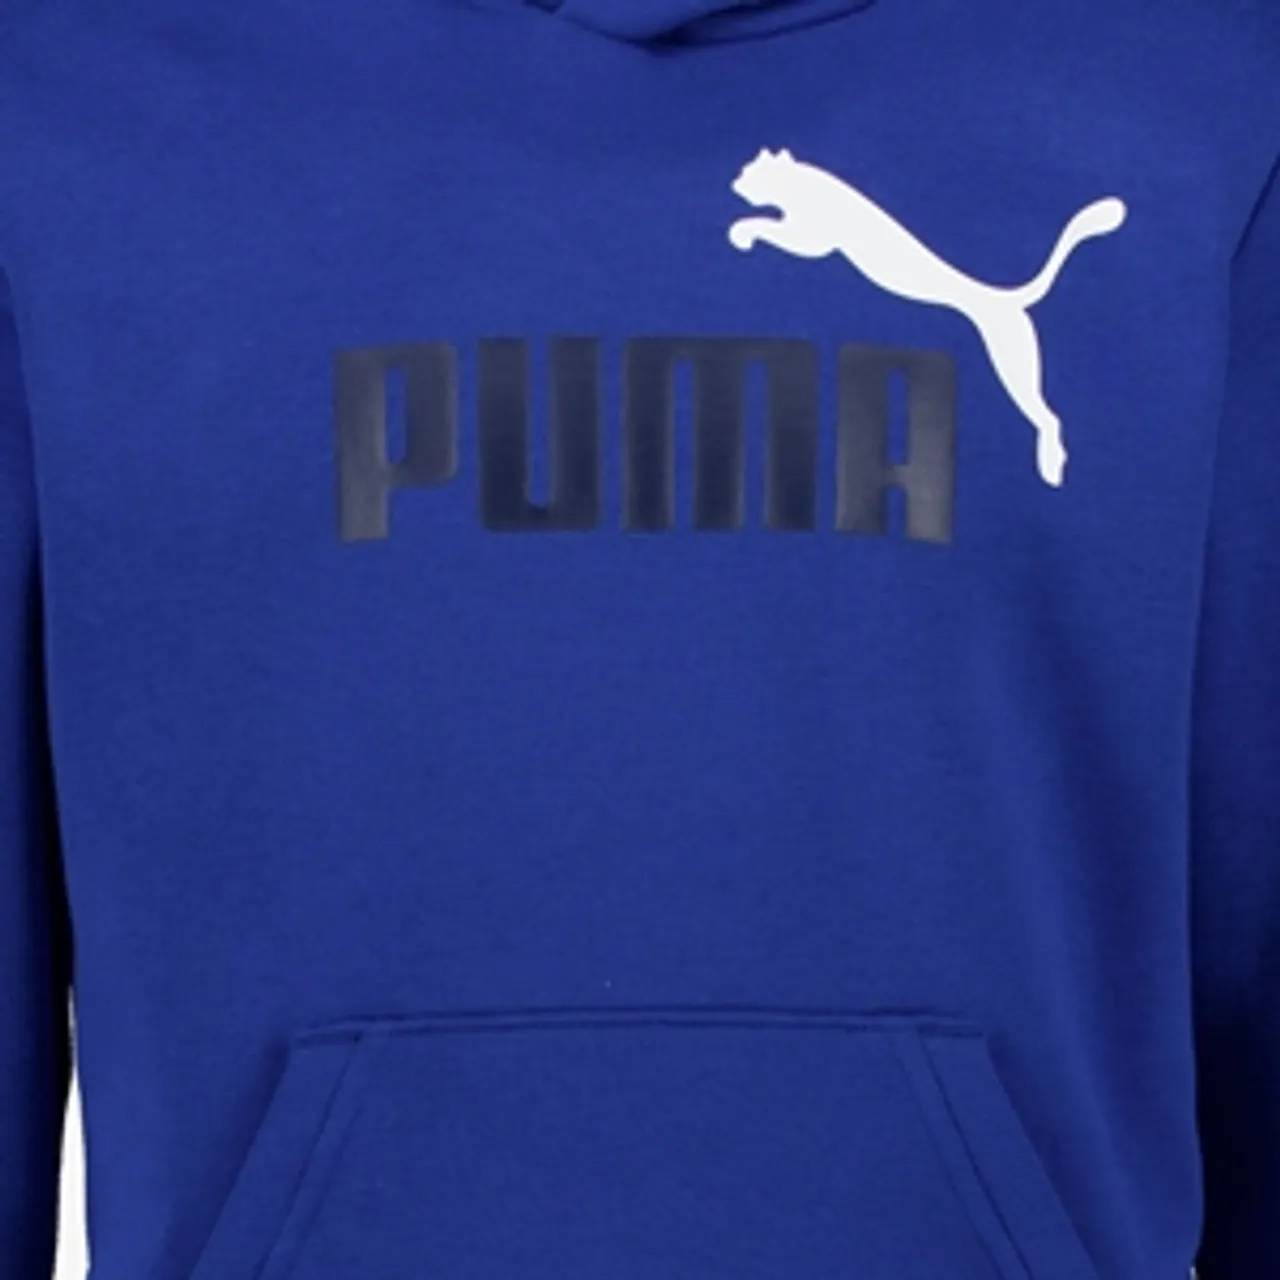 Puma Essentials Big Logo kinder hoodie blauw